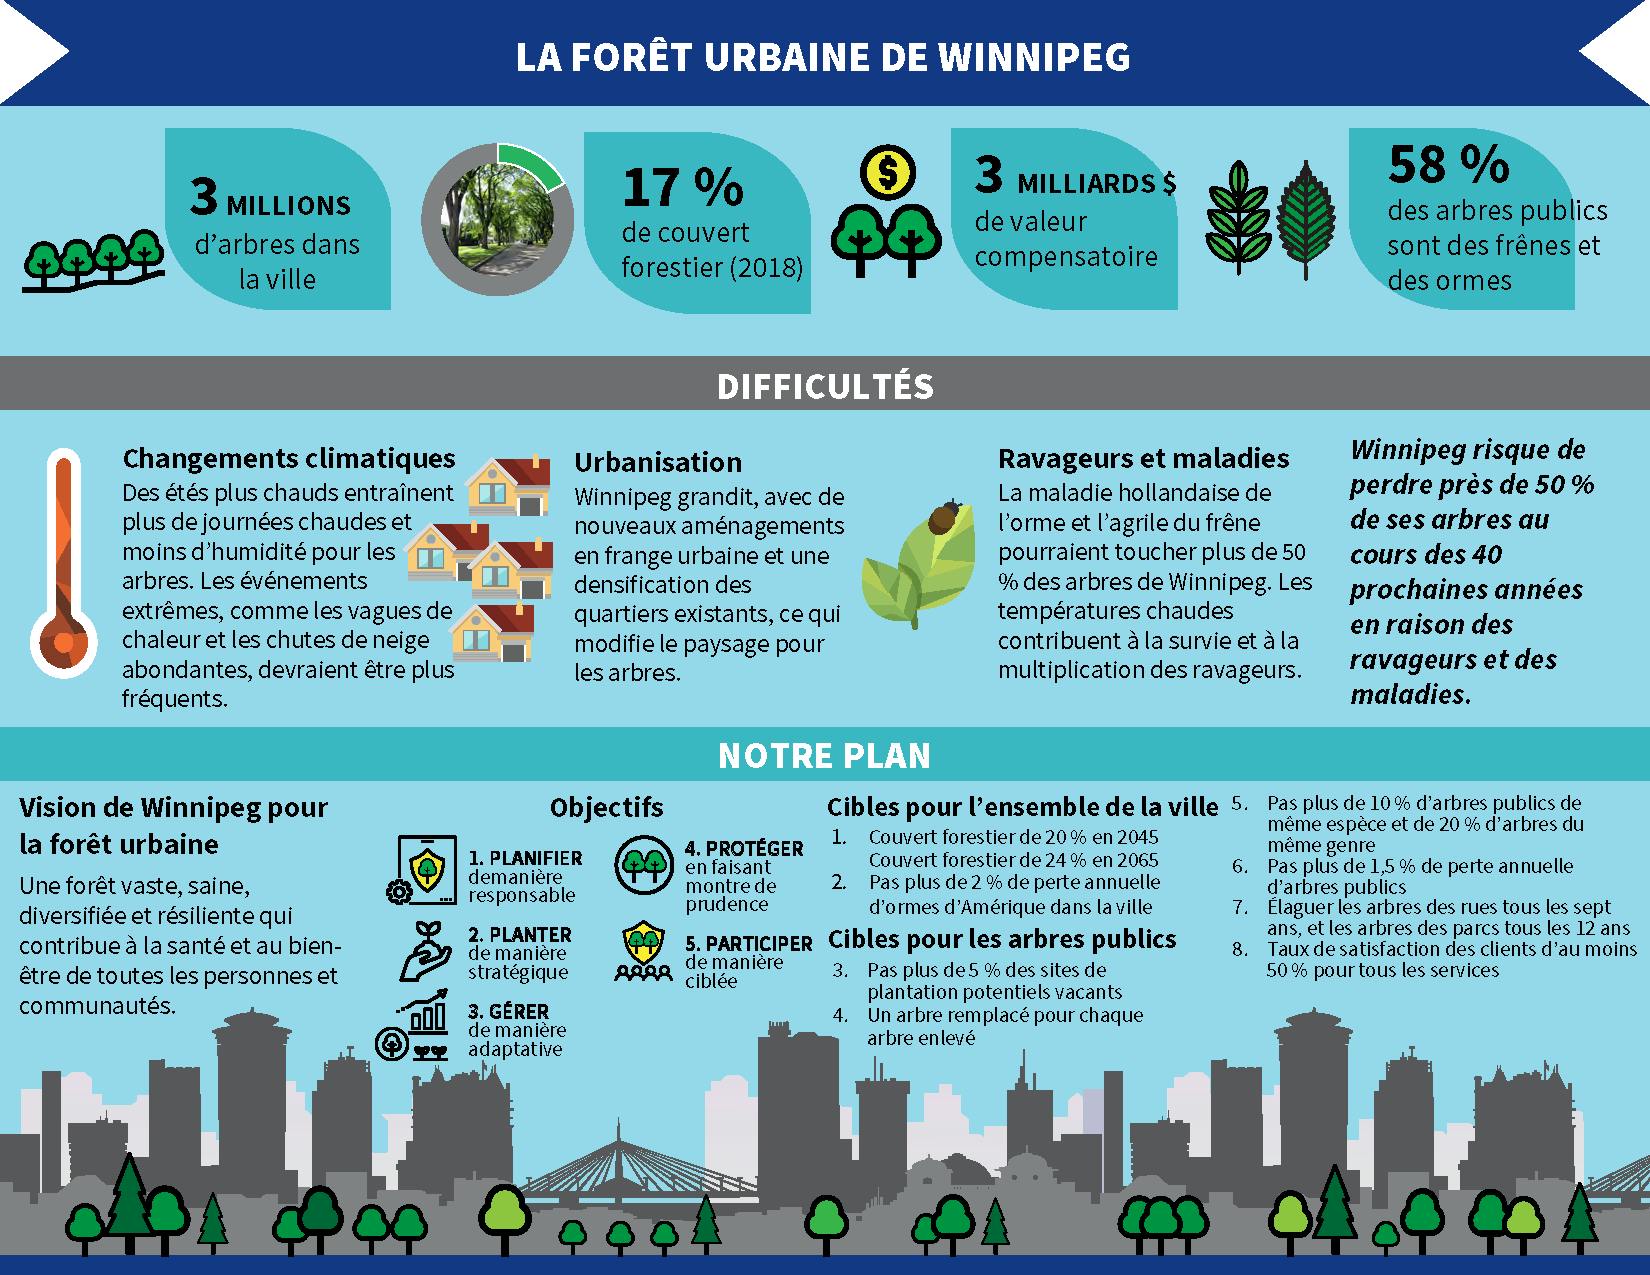 La forêt urbaine de Winnipeg